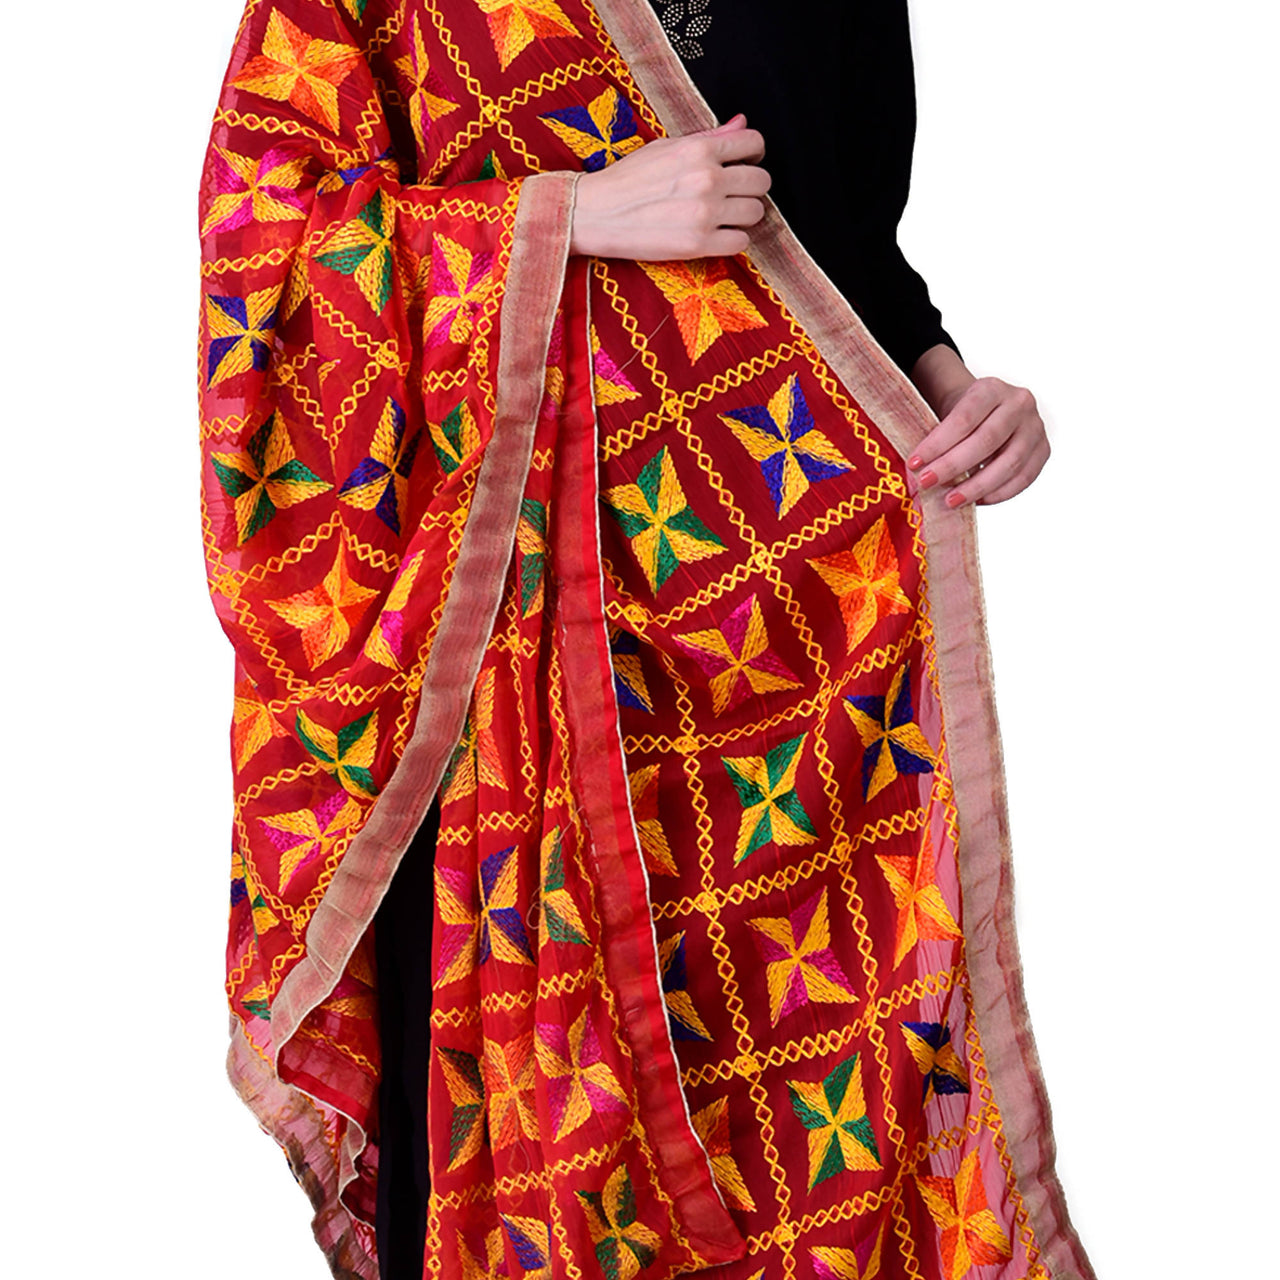 SWI Stylish Women's Embroidered Phulkari Chiffon Red Dupatta